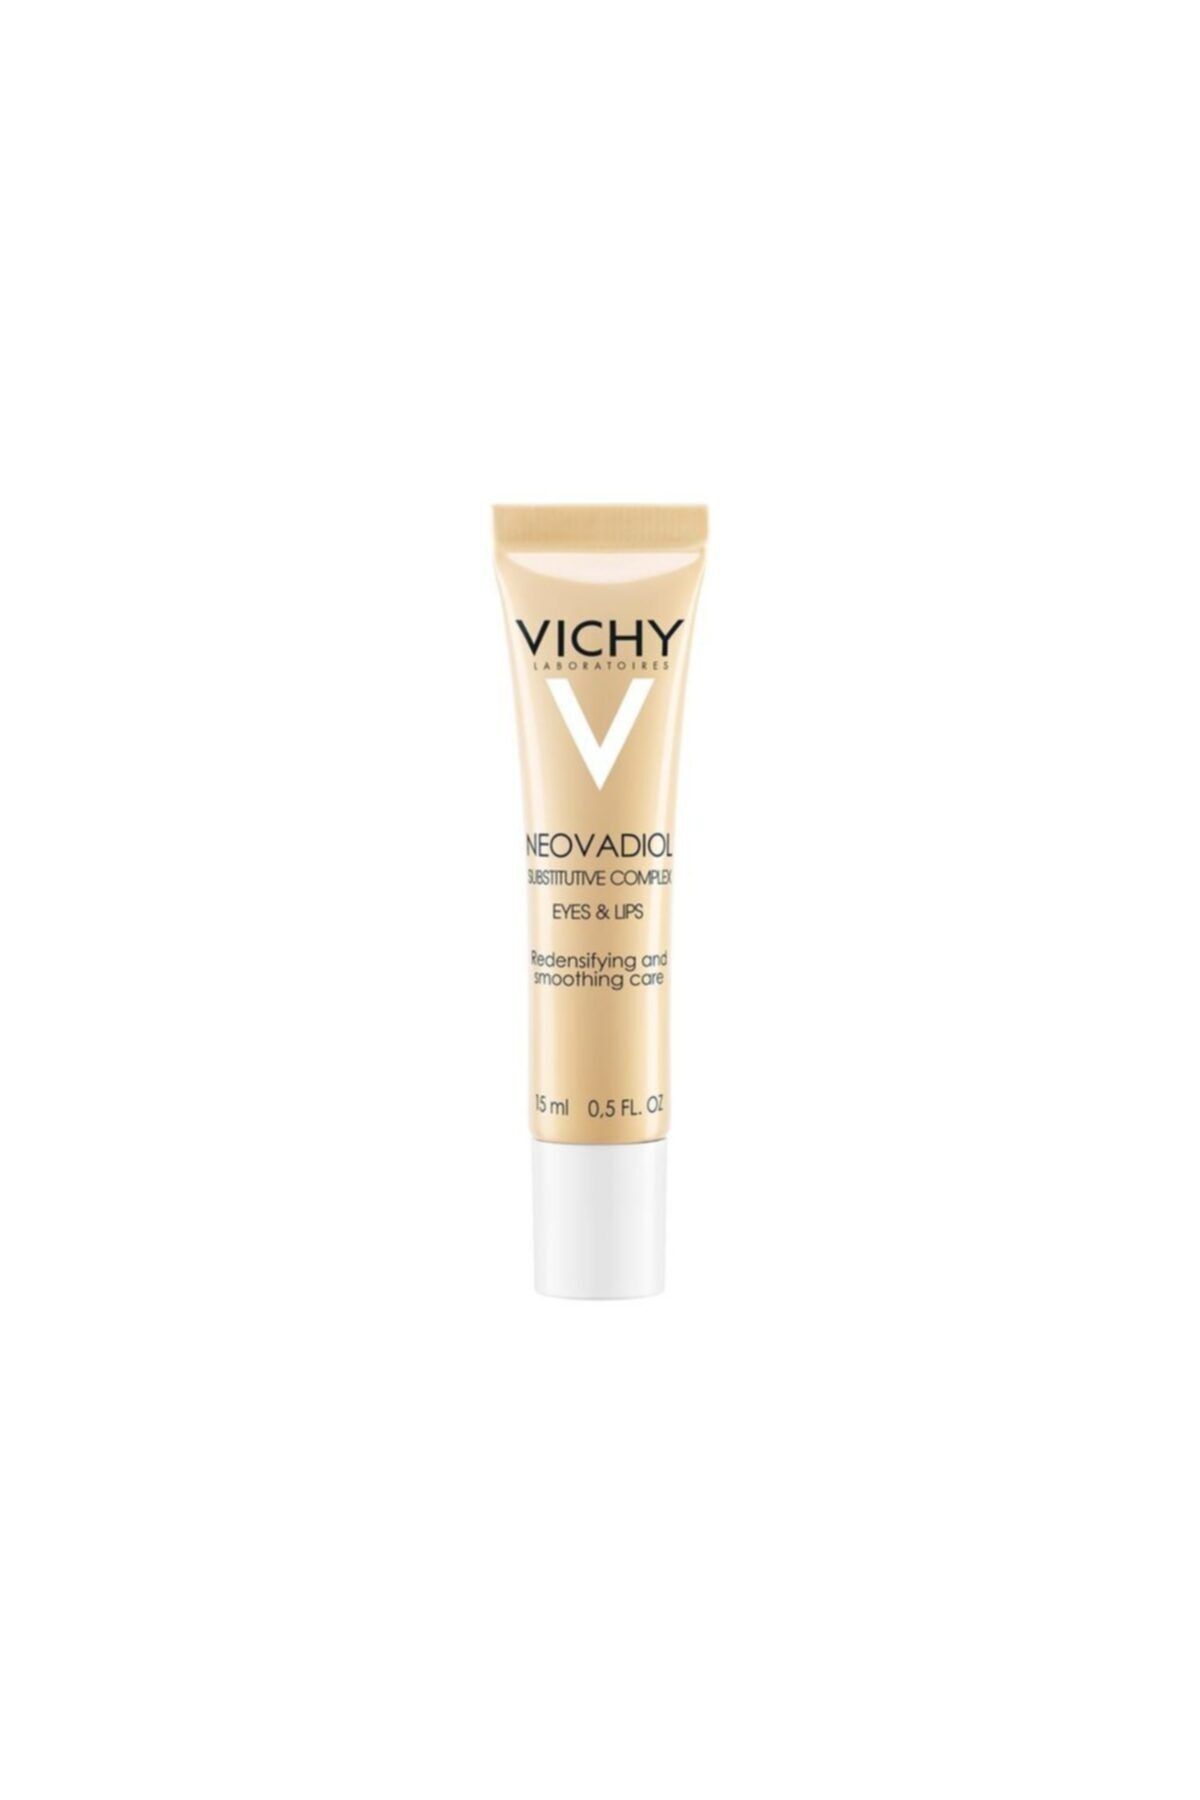 Vichy Neovadiol Lips & Eyes Contours 15 ml